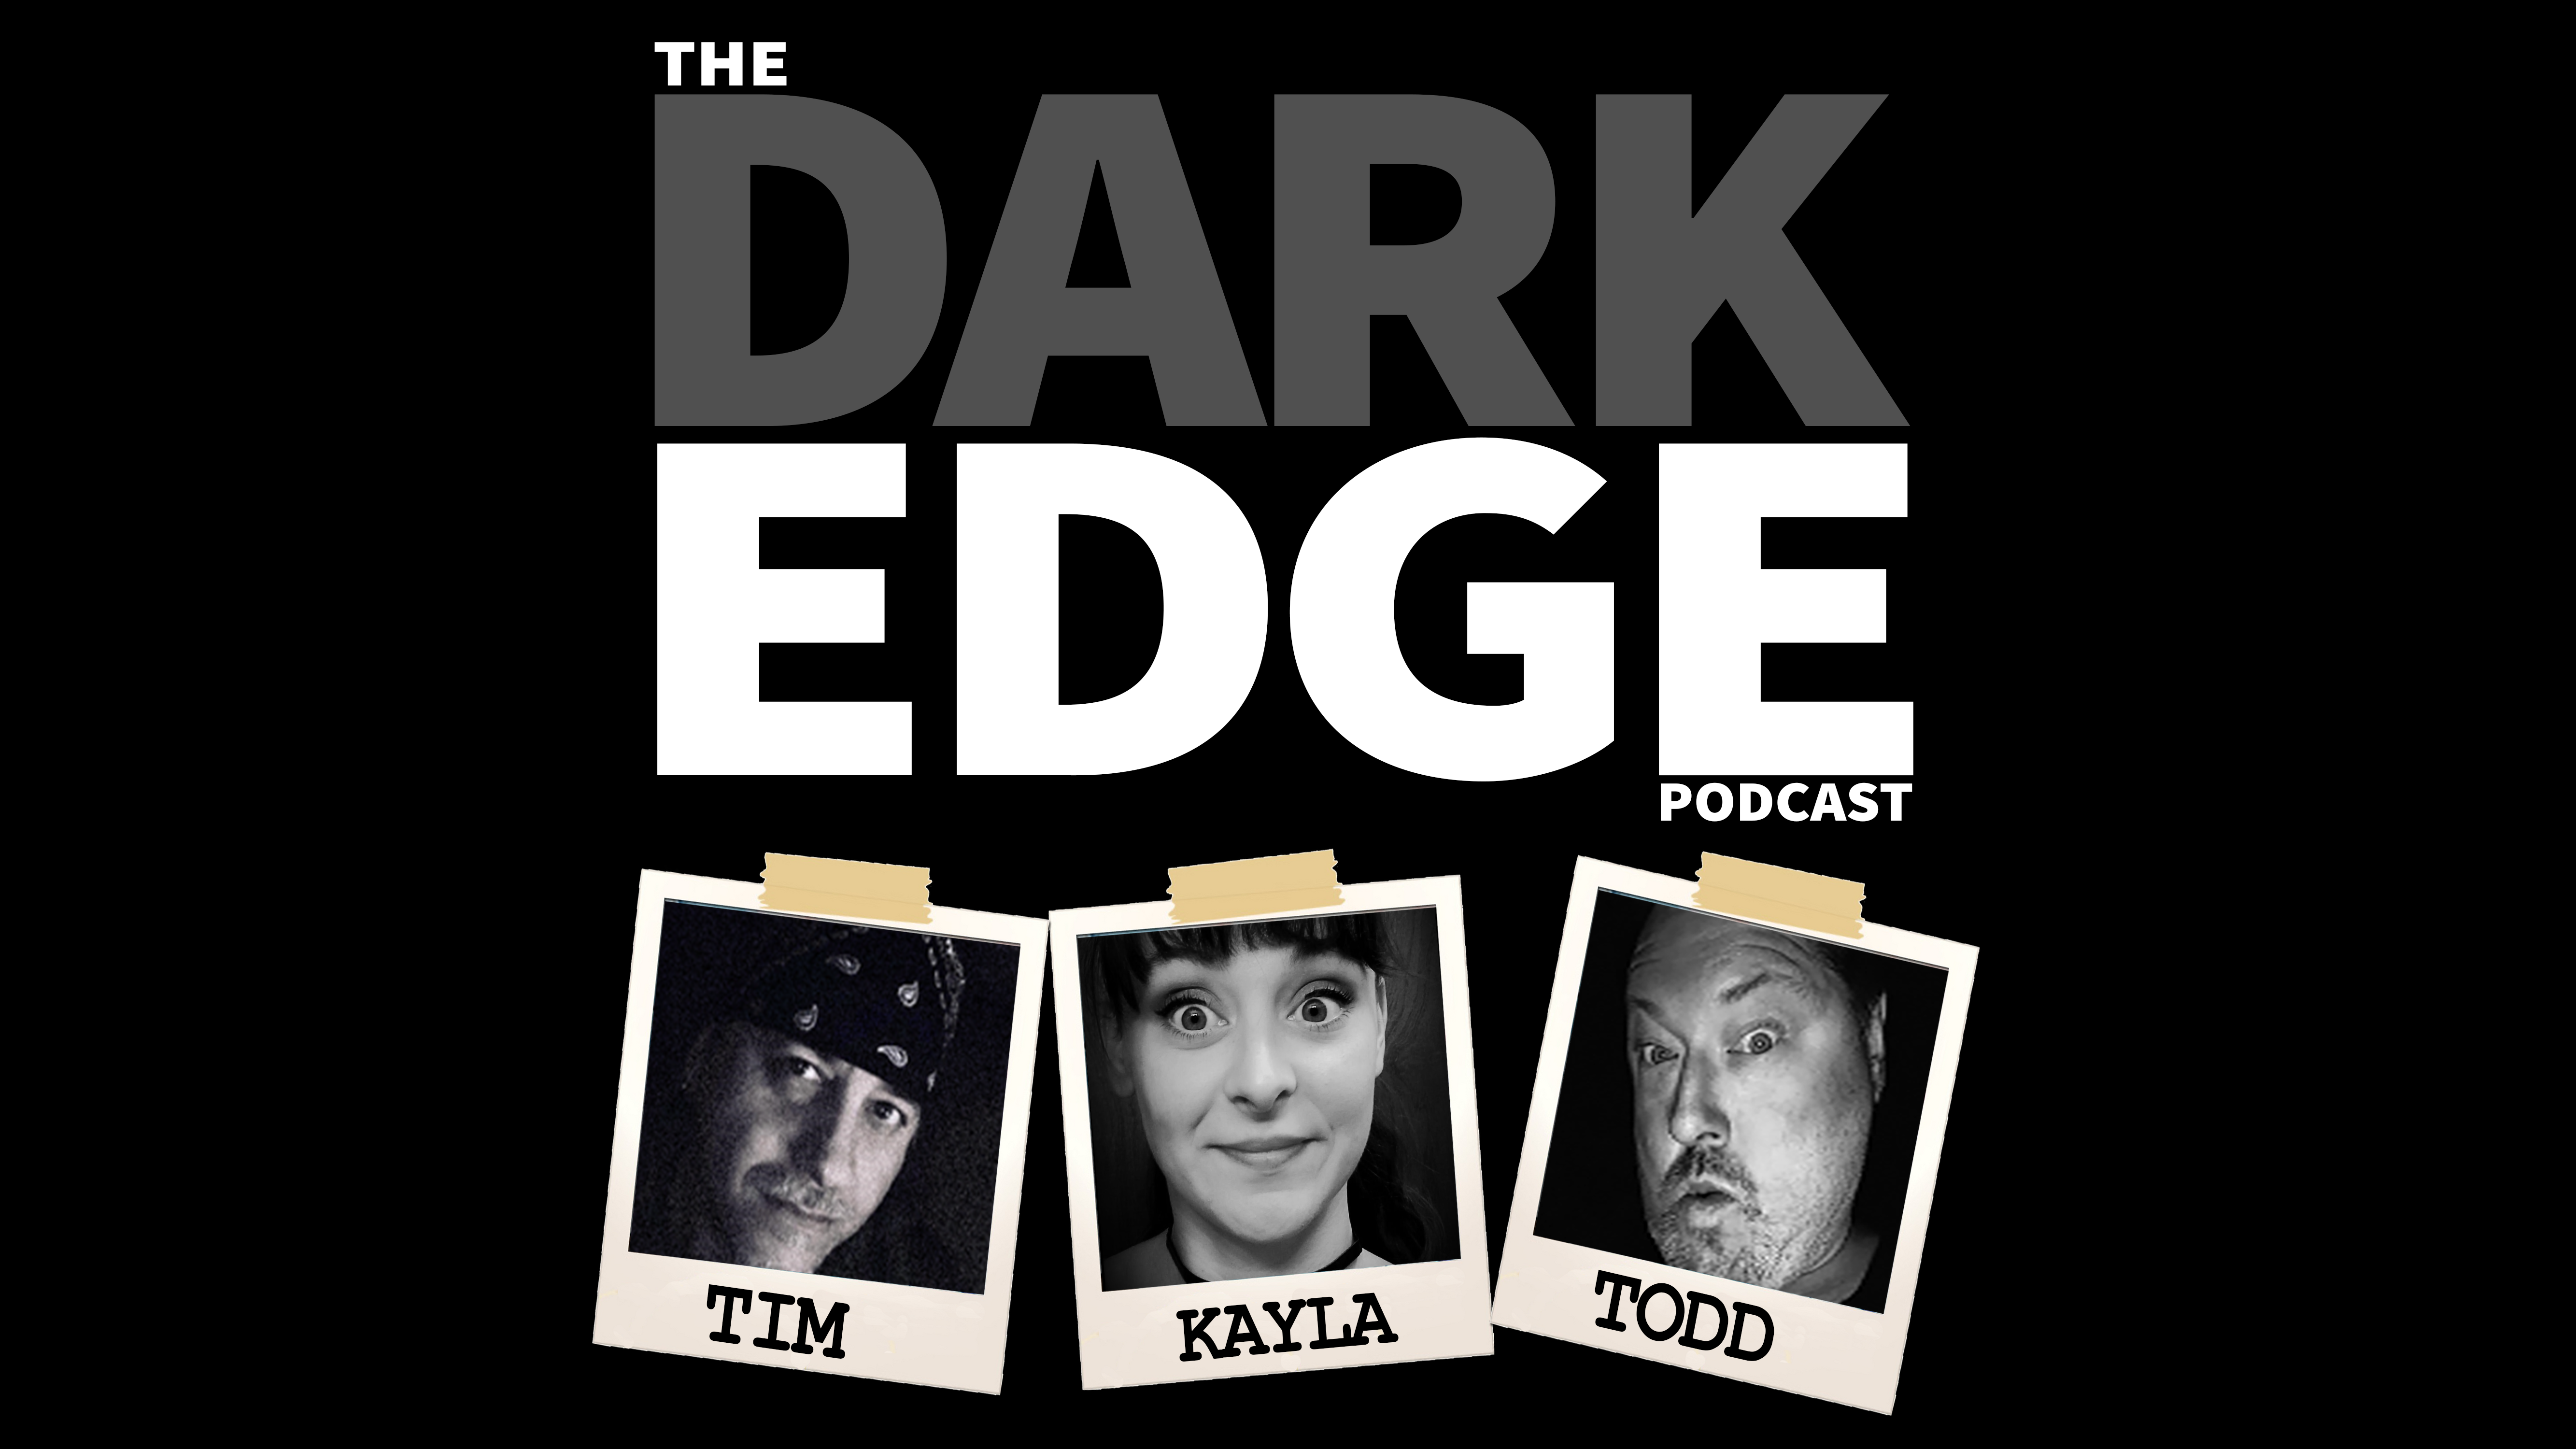 The Dark Edge Podcast